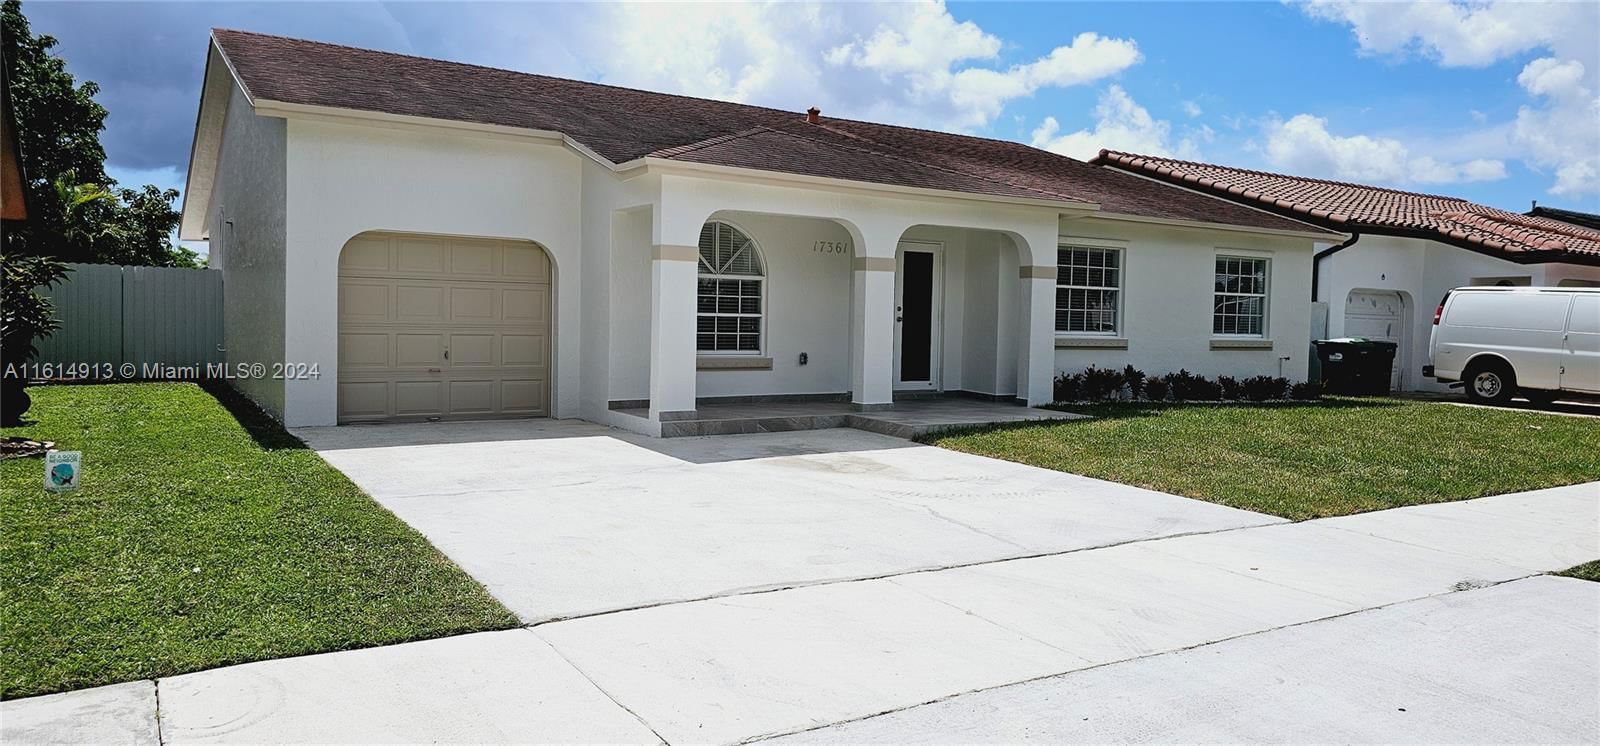 Real estate property located at 17361 144th Ct, Miami-Dade County, MAJESTIC HOMES, Miami, FL